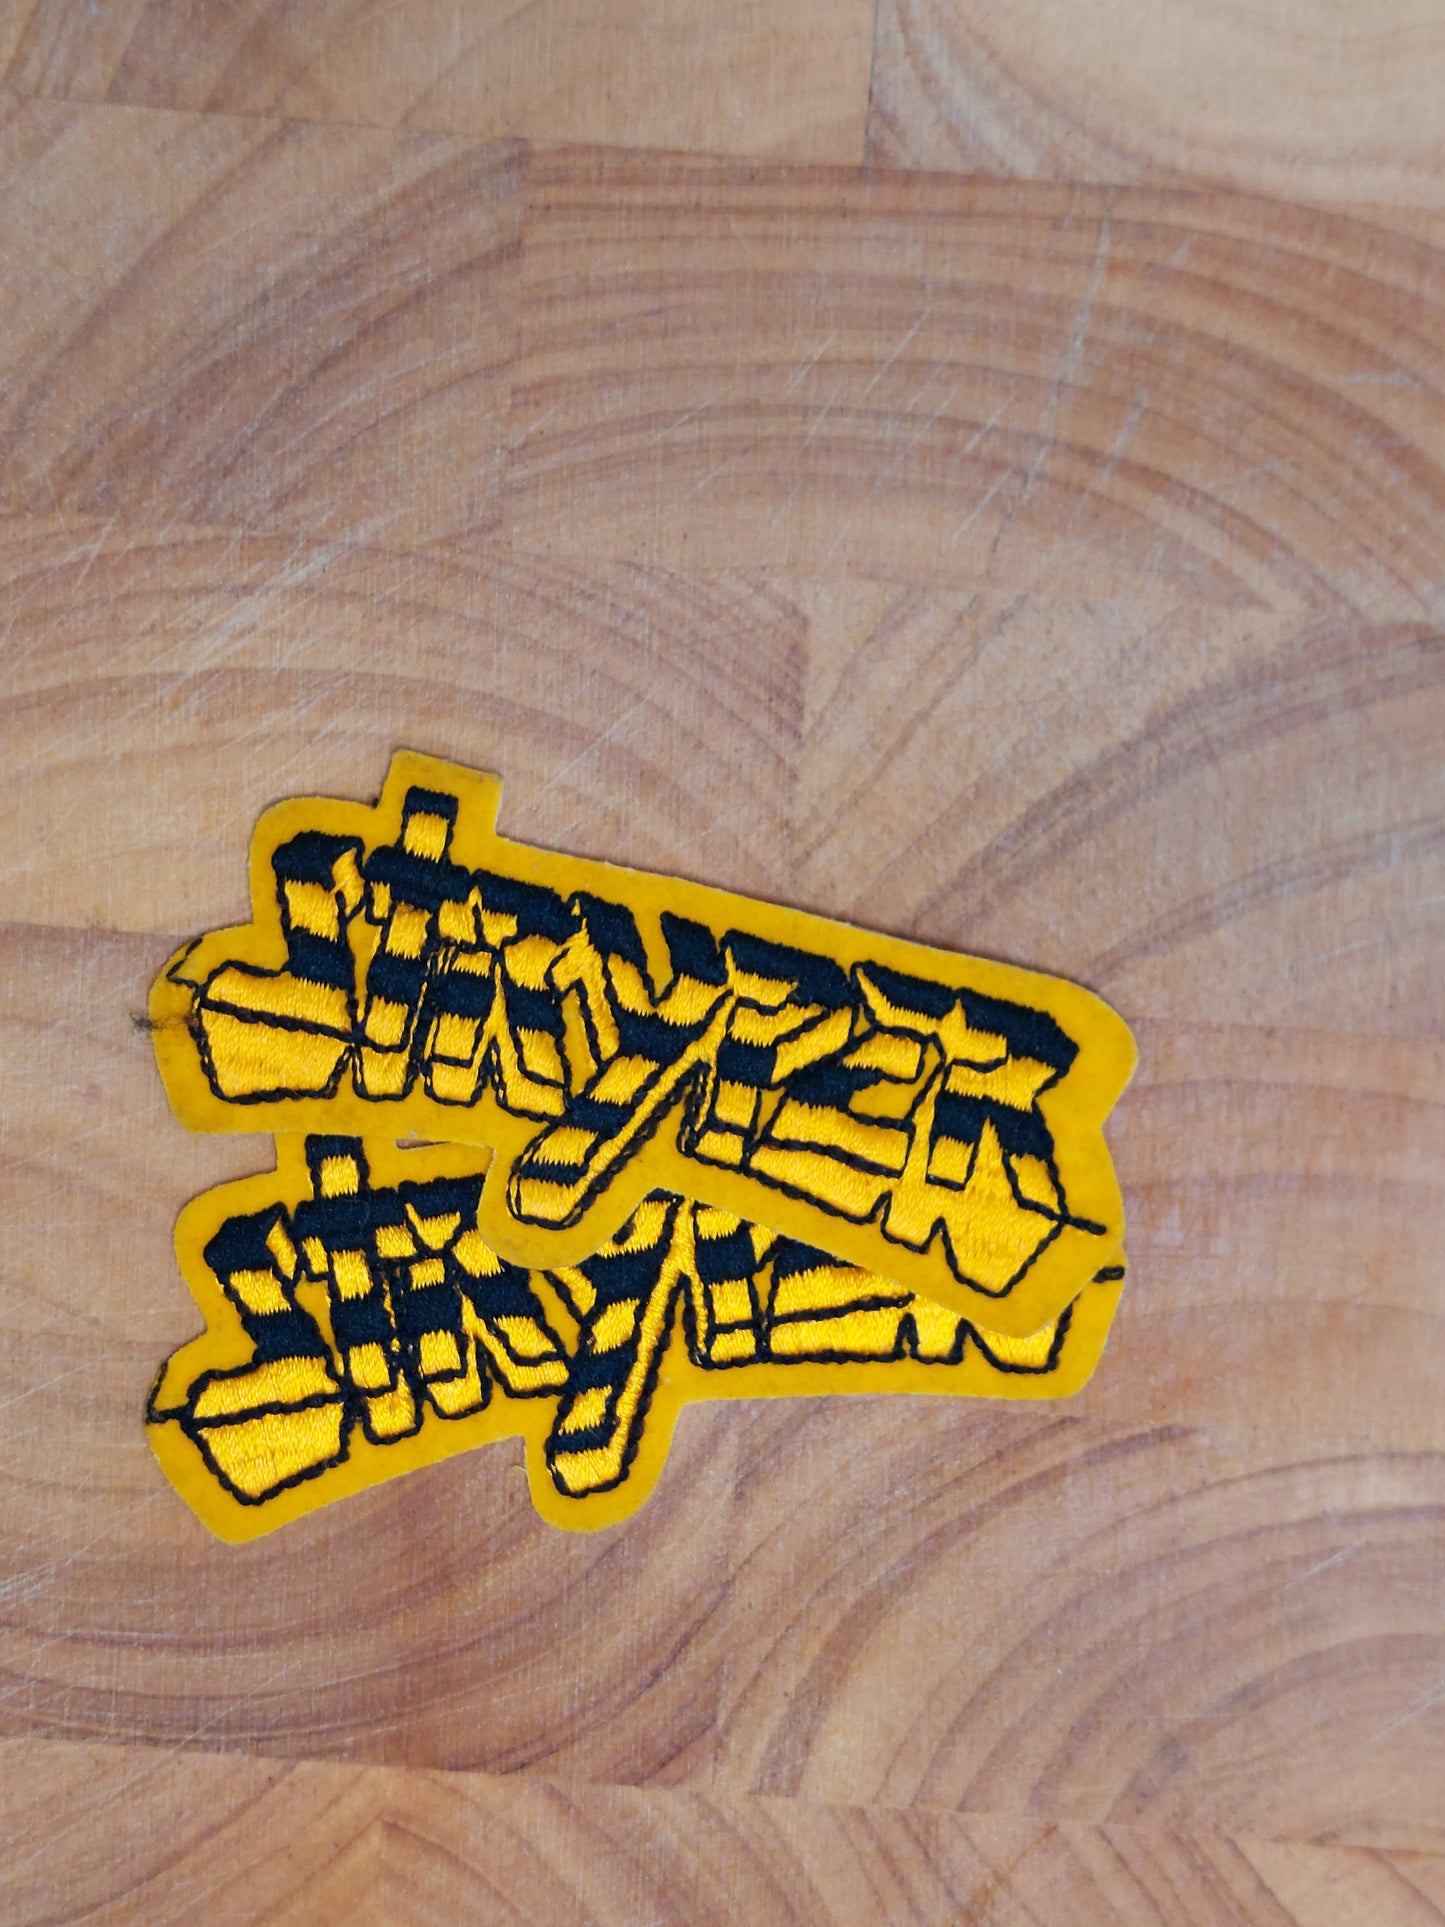 Stryper logo 80s